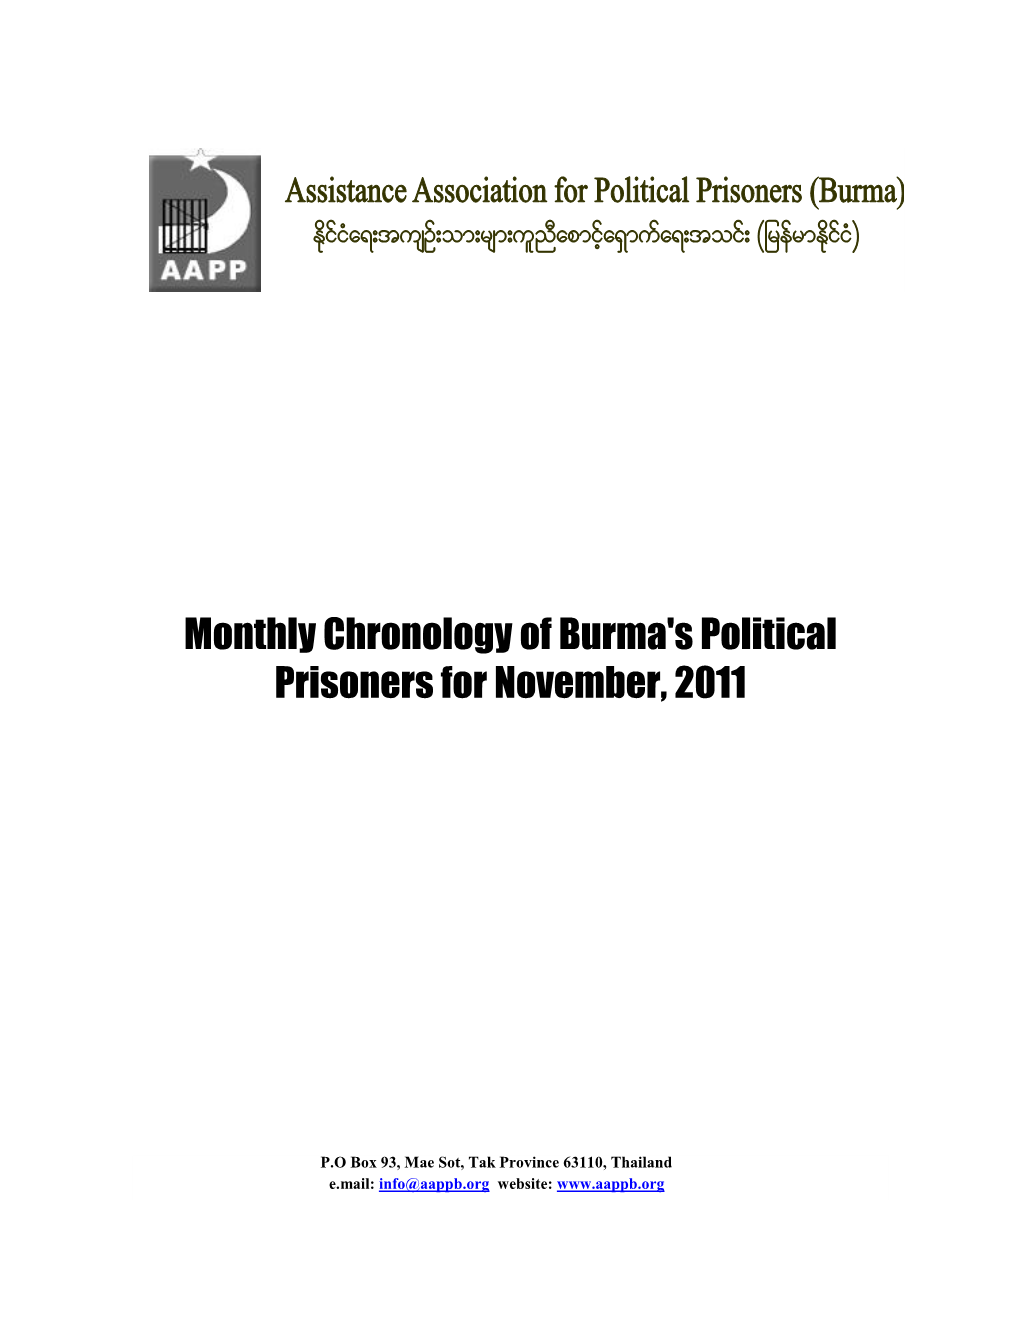 Monthly Chronology of Burma's Political Prisoners for November, 2011